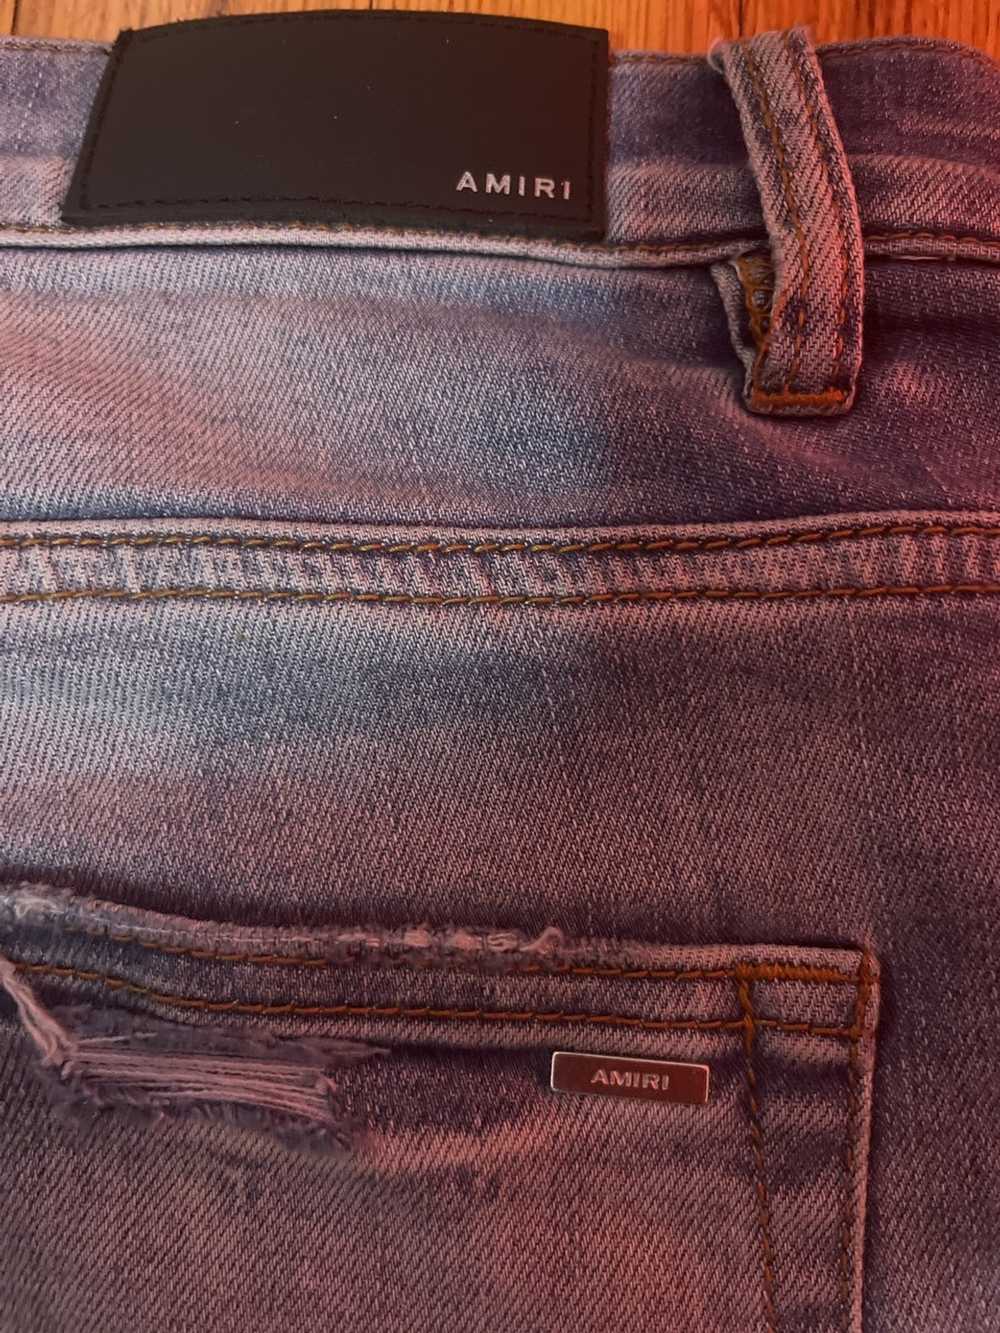 Amiri amiri mx1 black patch jeans - image 5